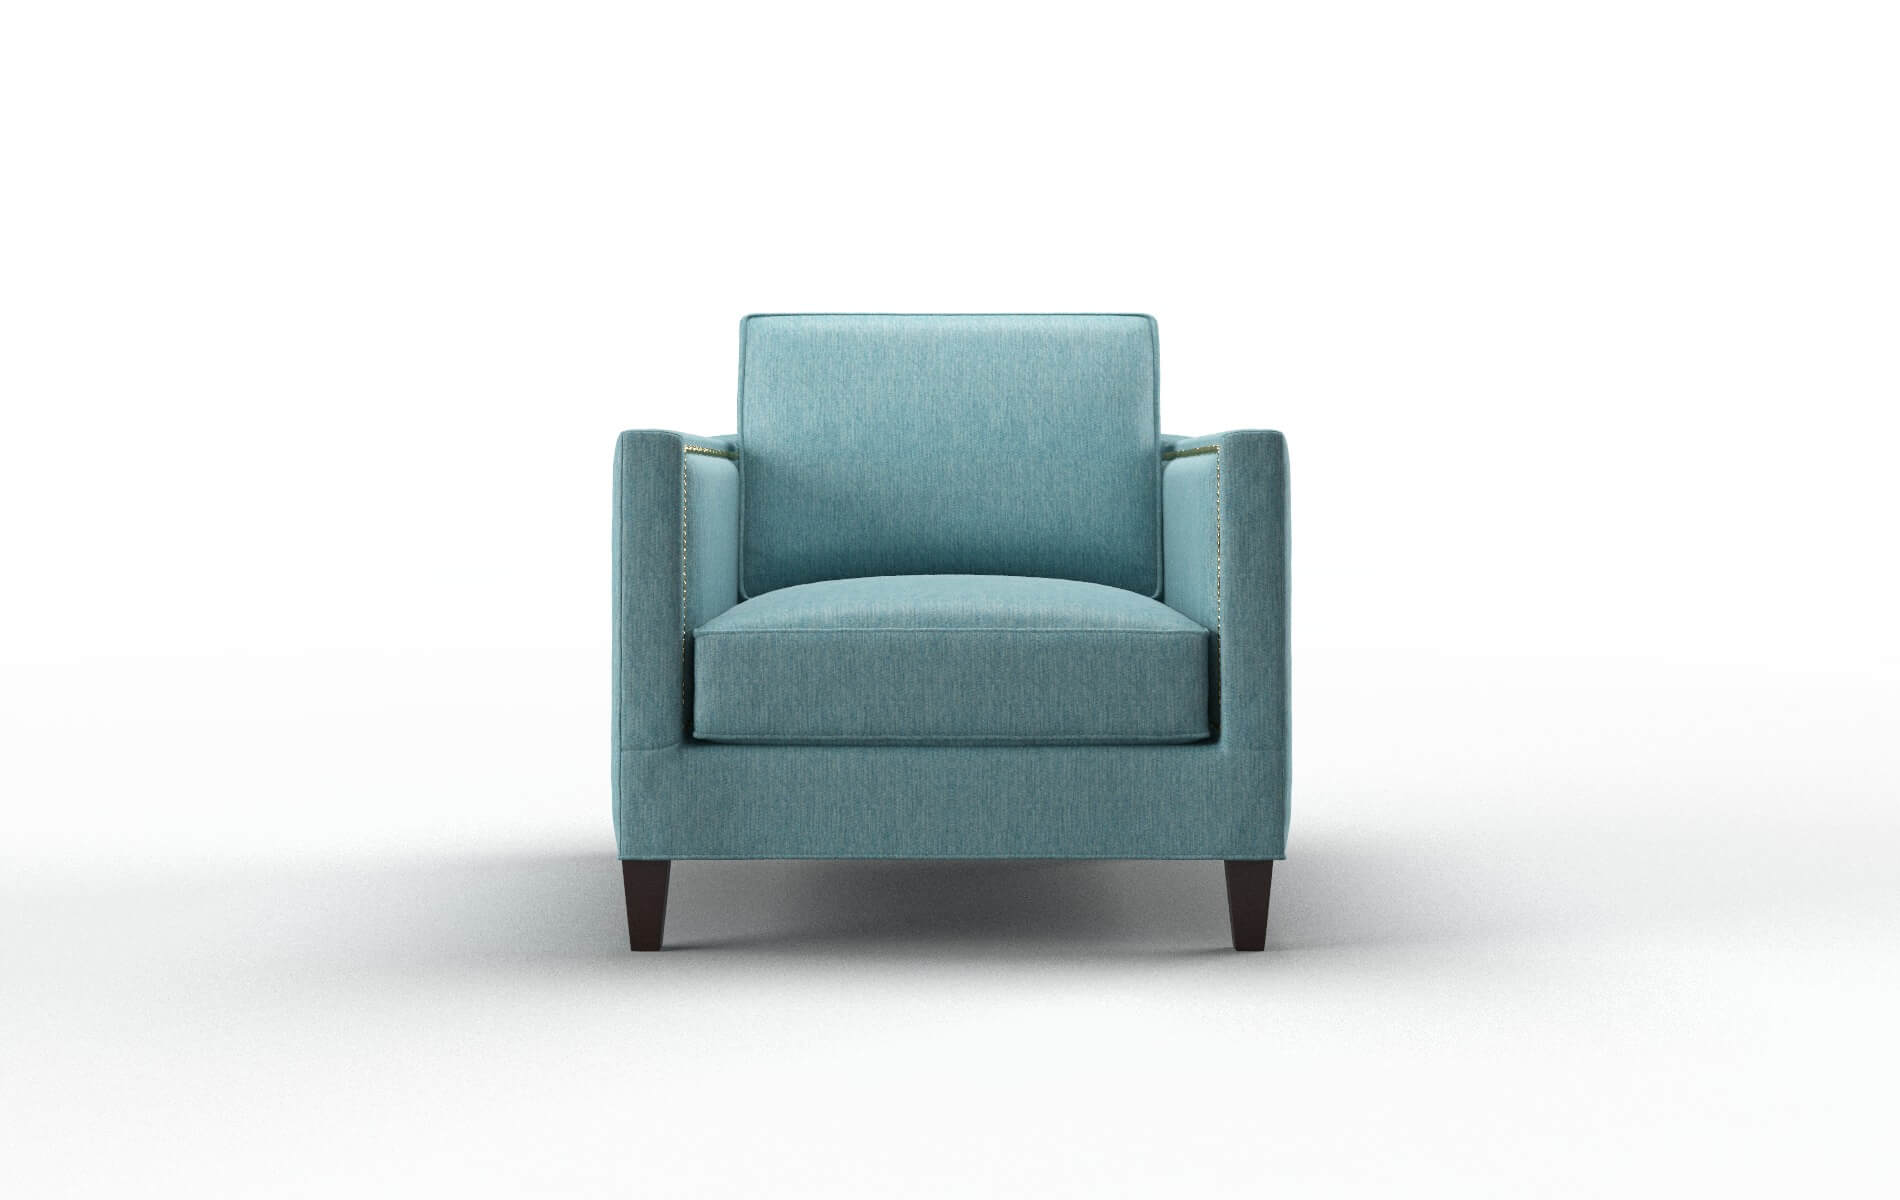 Alps Cosmo Turquoise chair espresso legs